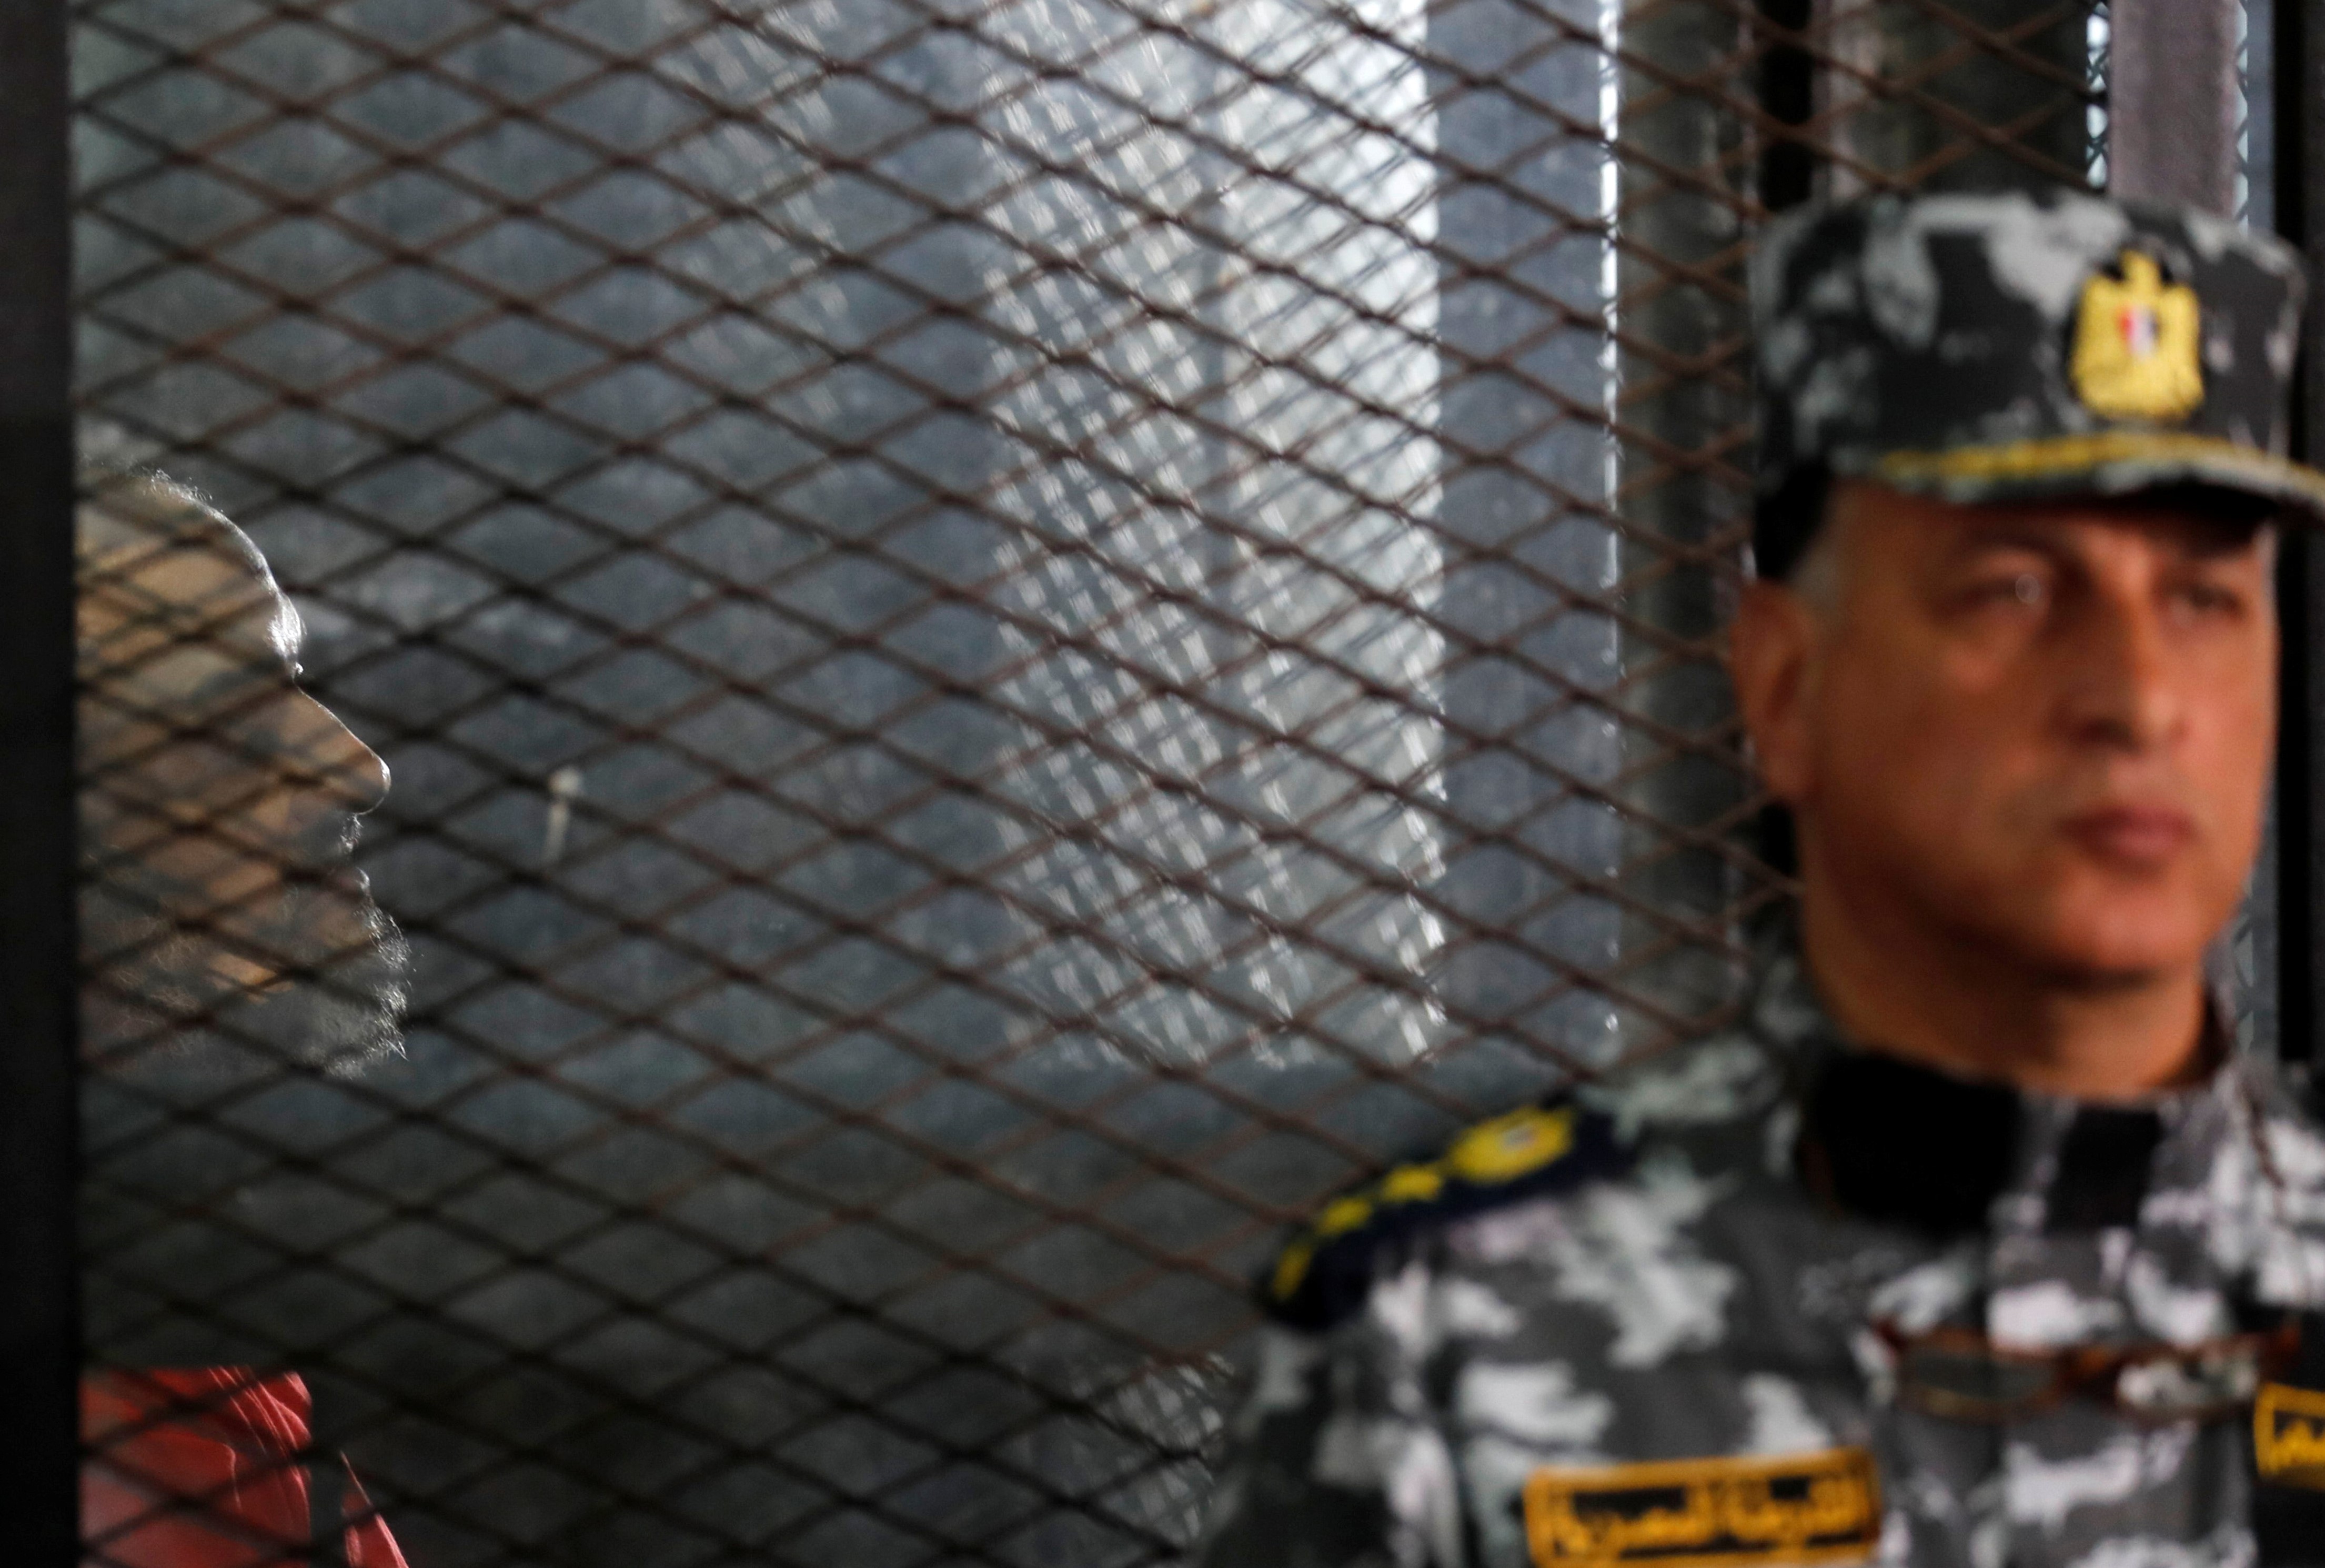 Muslim Brotherhood's senior member Mohamed El-Beltagy is seen behind bars during a court case on 26 December, 2018 (Reuters)